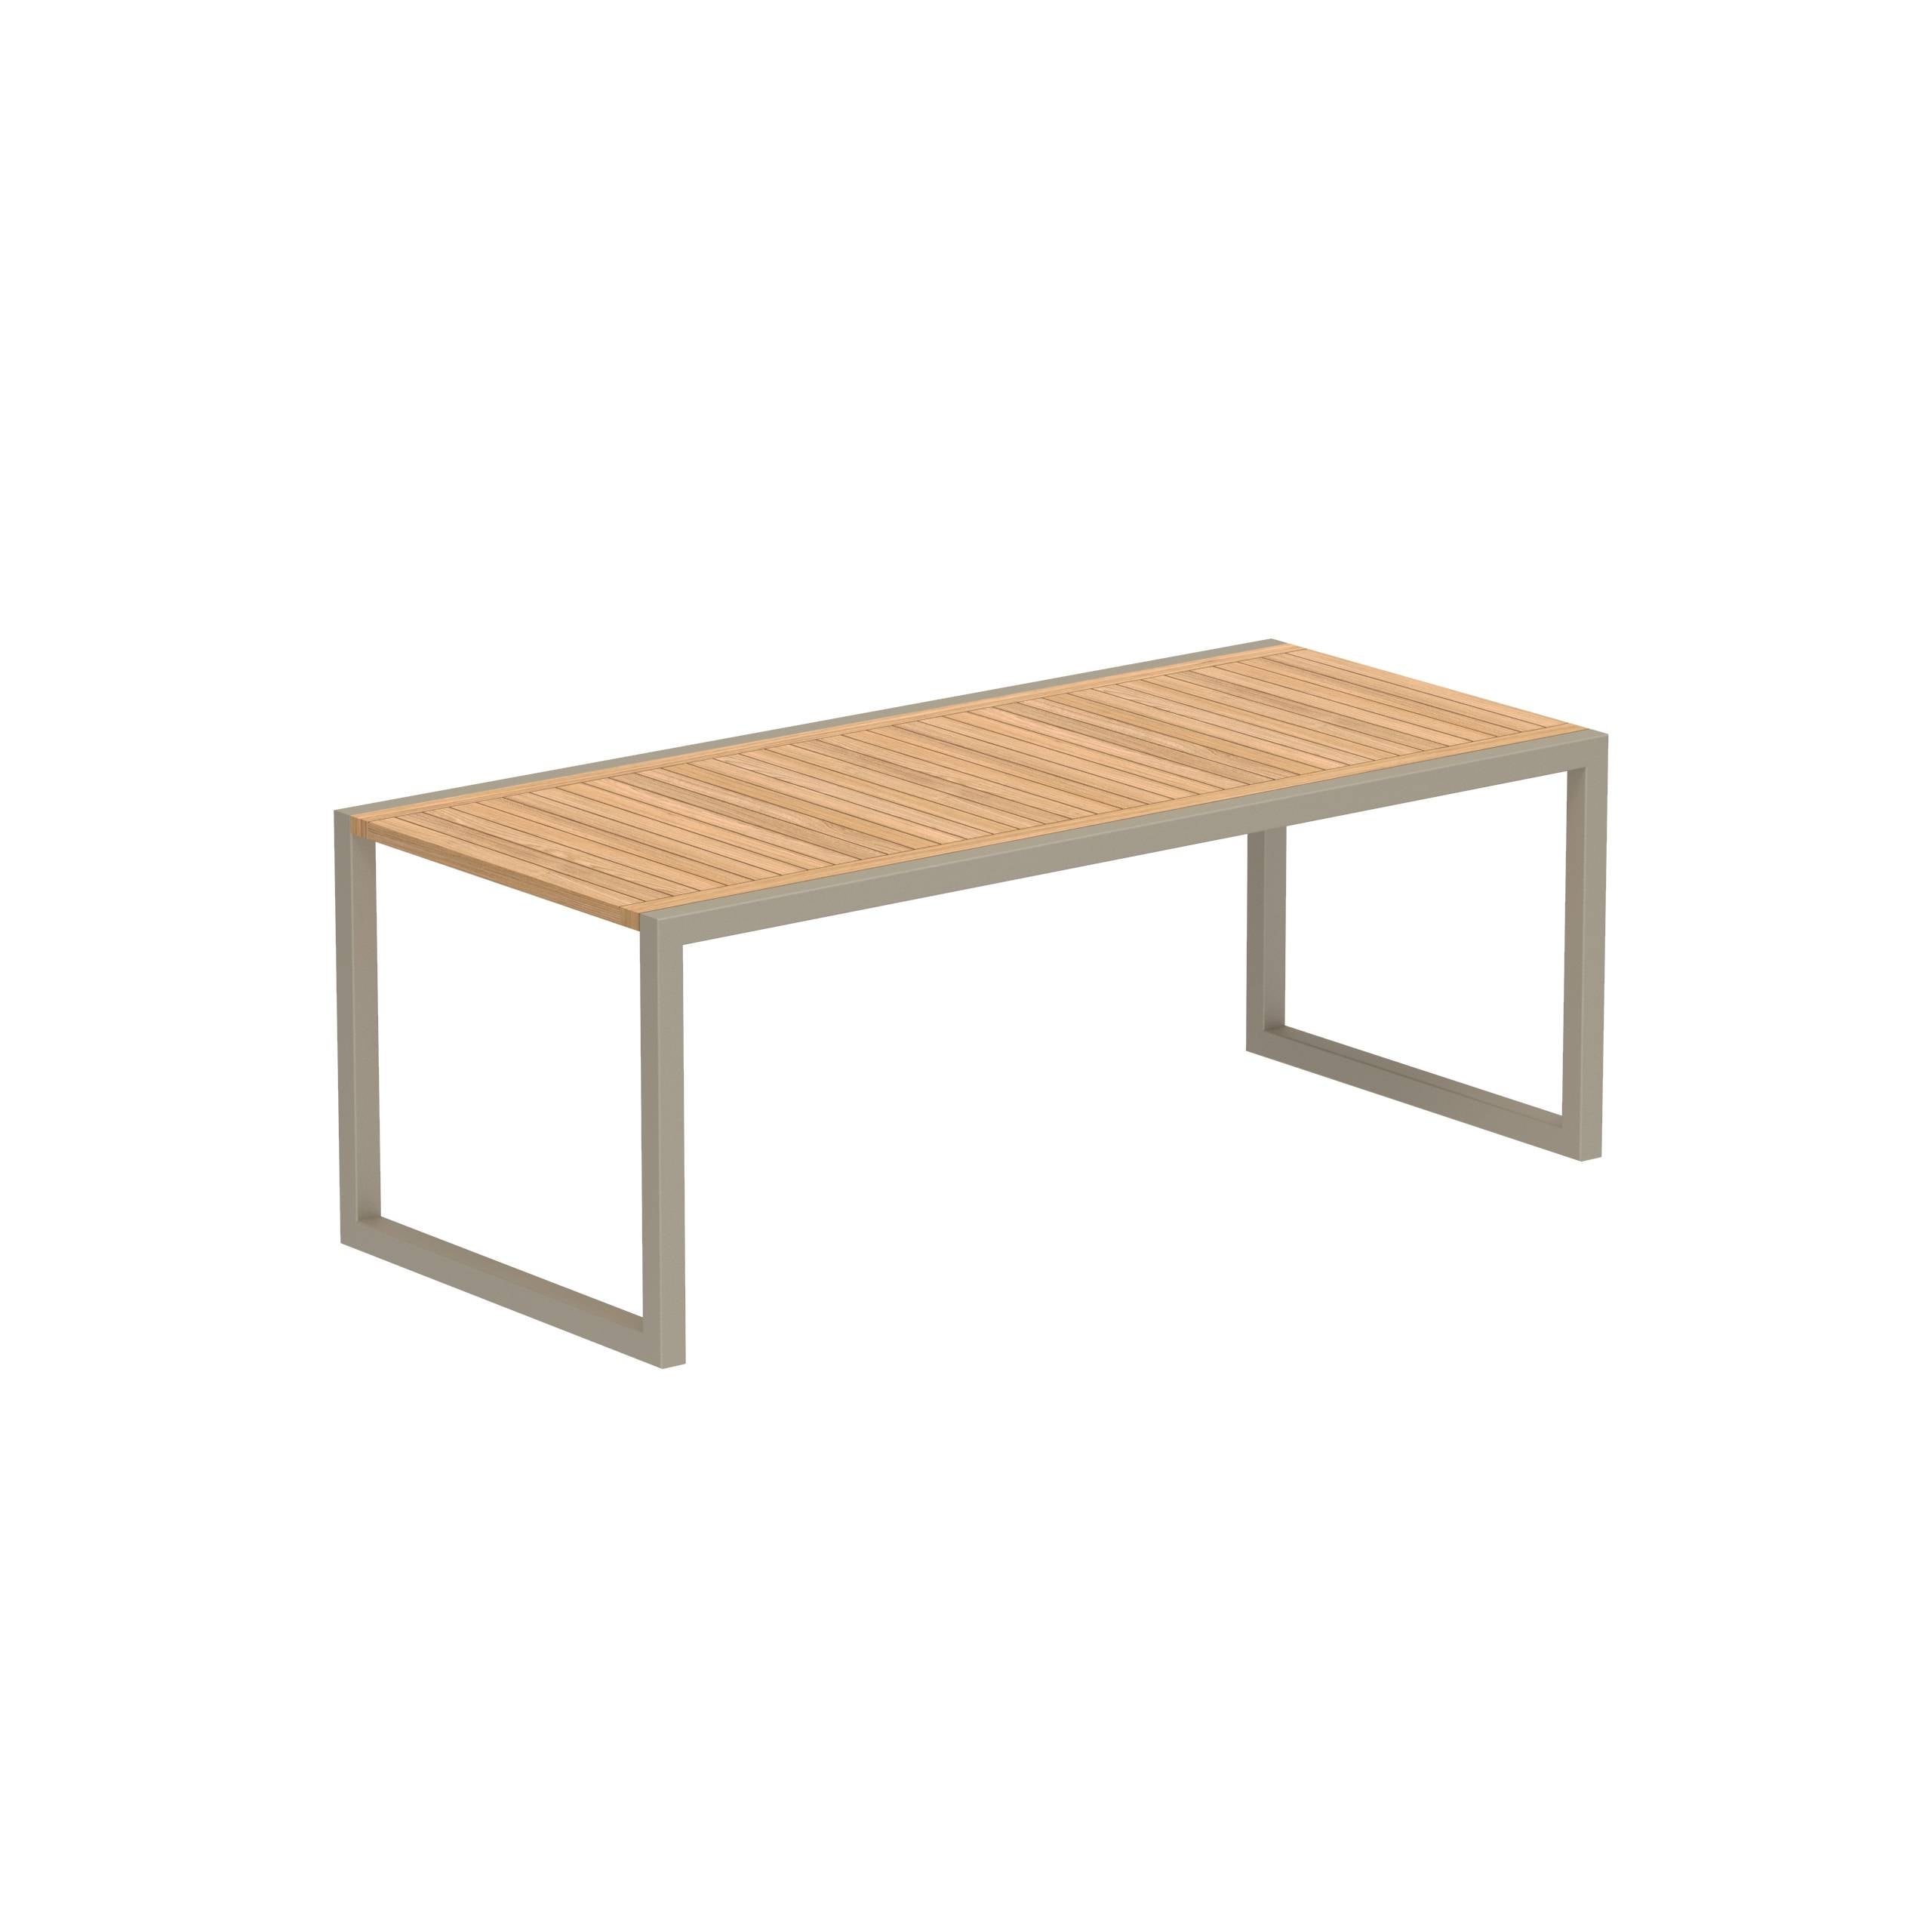 Ninix Table 200x90cm Sand Frame And Teak Top